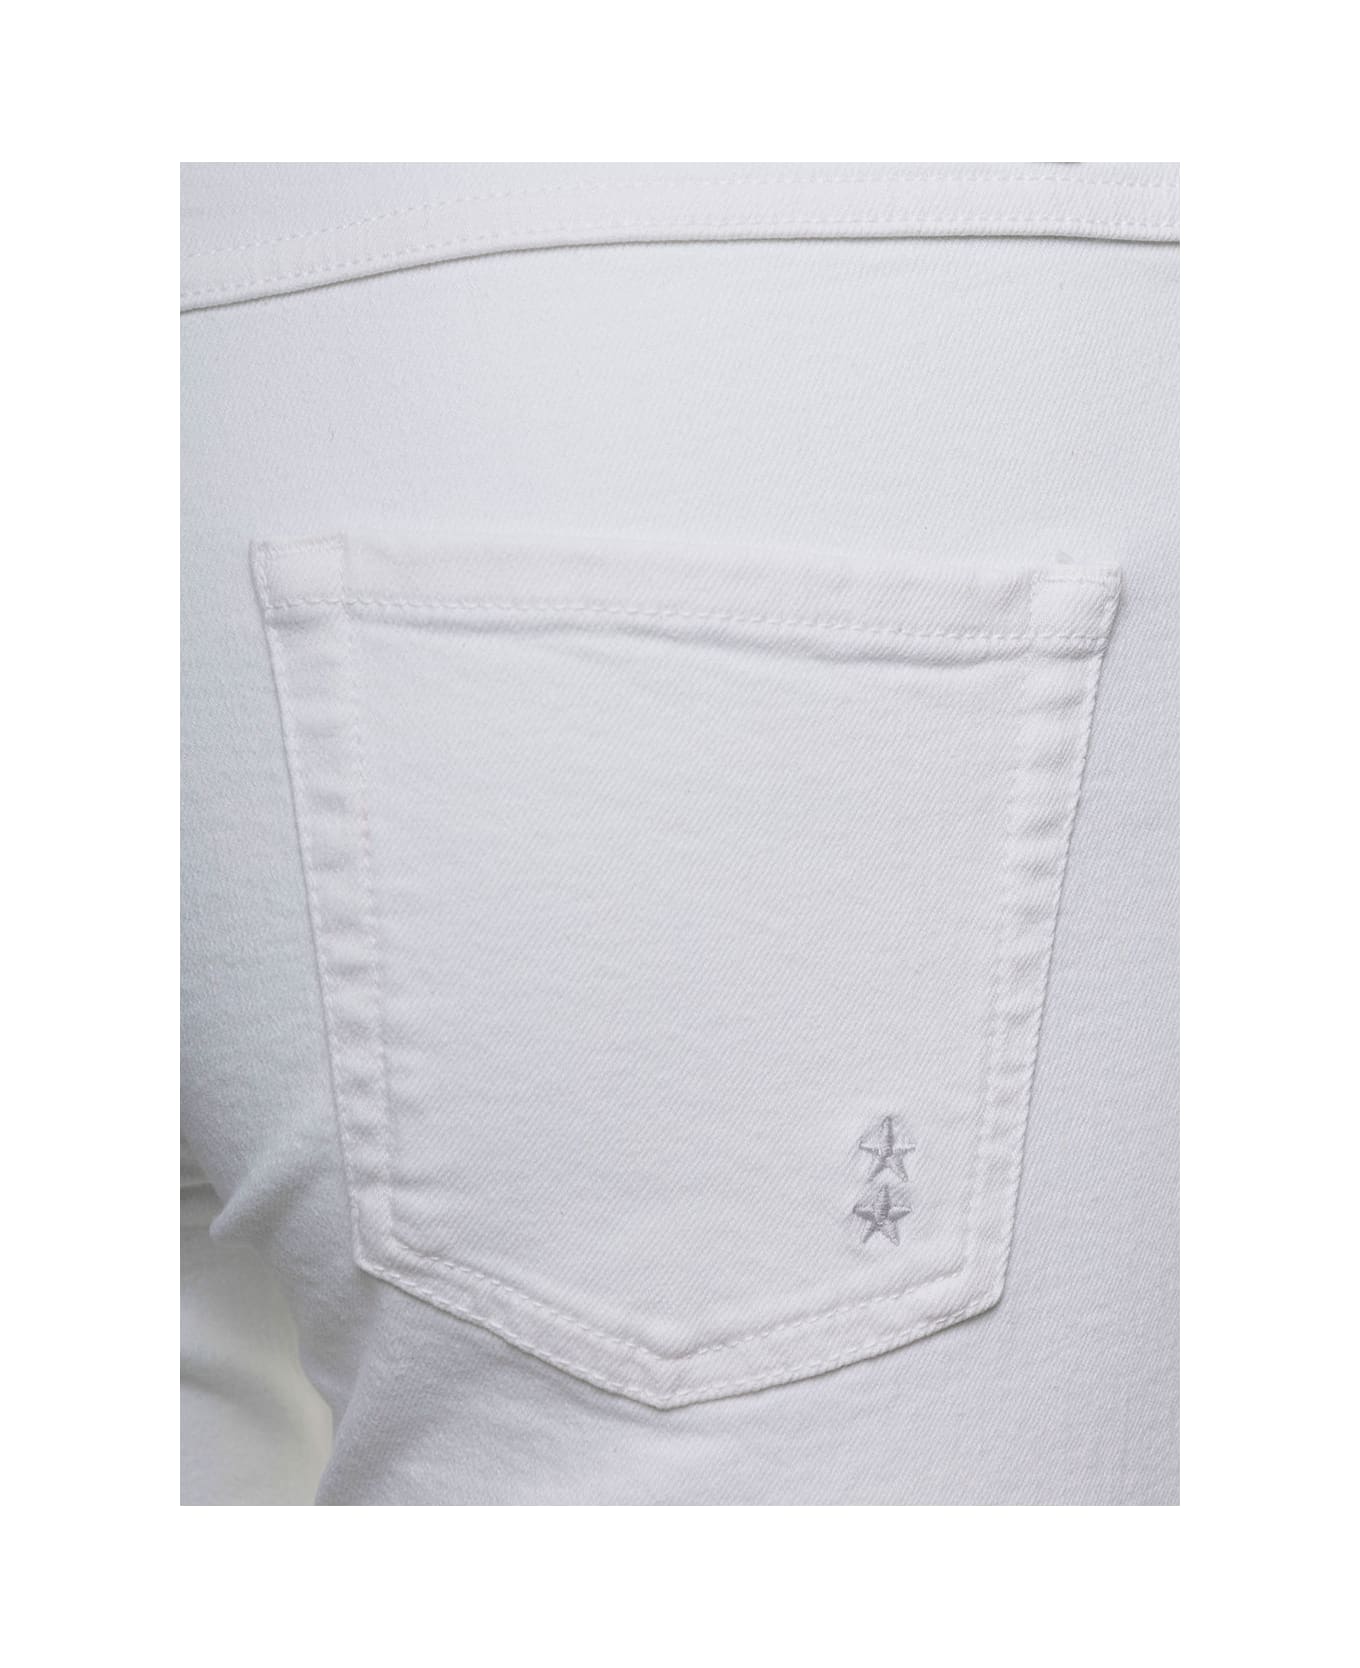 Icon Denim 'pam' White Five-pockets Flared Jeans In Cotton Blend Denim Woman - White